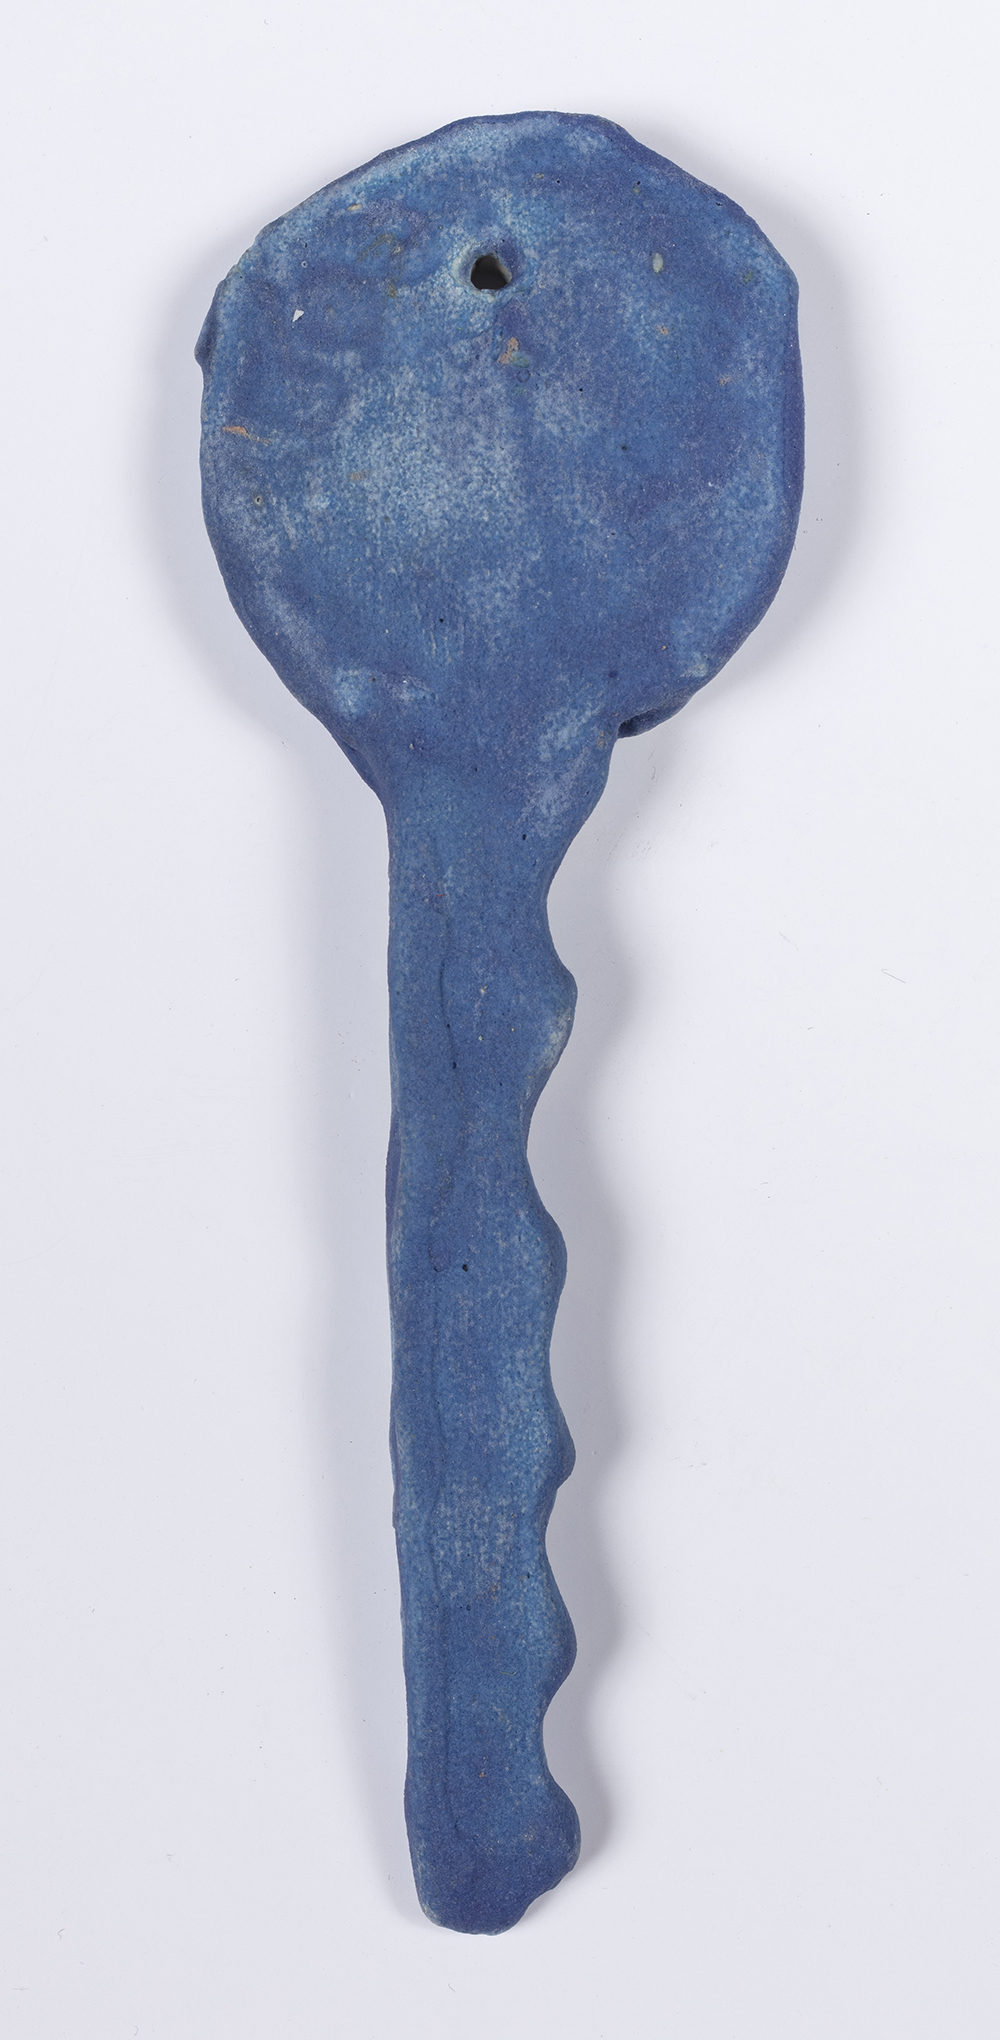 Kevin McNamee-Tweed.<em> Volcazul Key</em>, 2019. Glazed ceramic, 4 3/4 x 1 3/4 inches (12.1 x 4.4 cm)